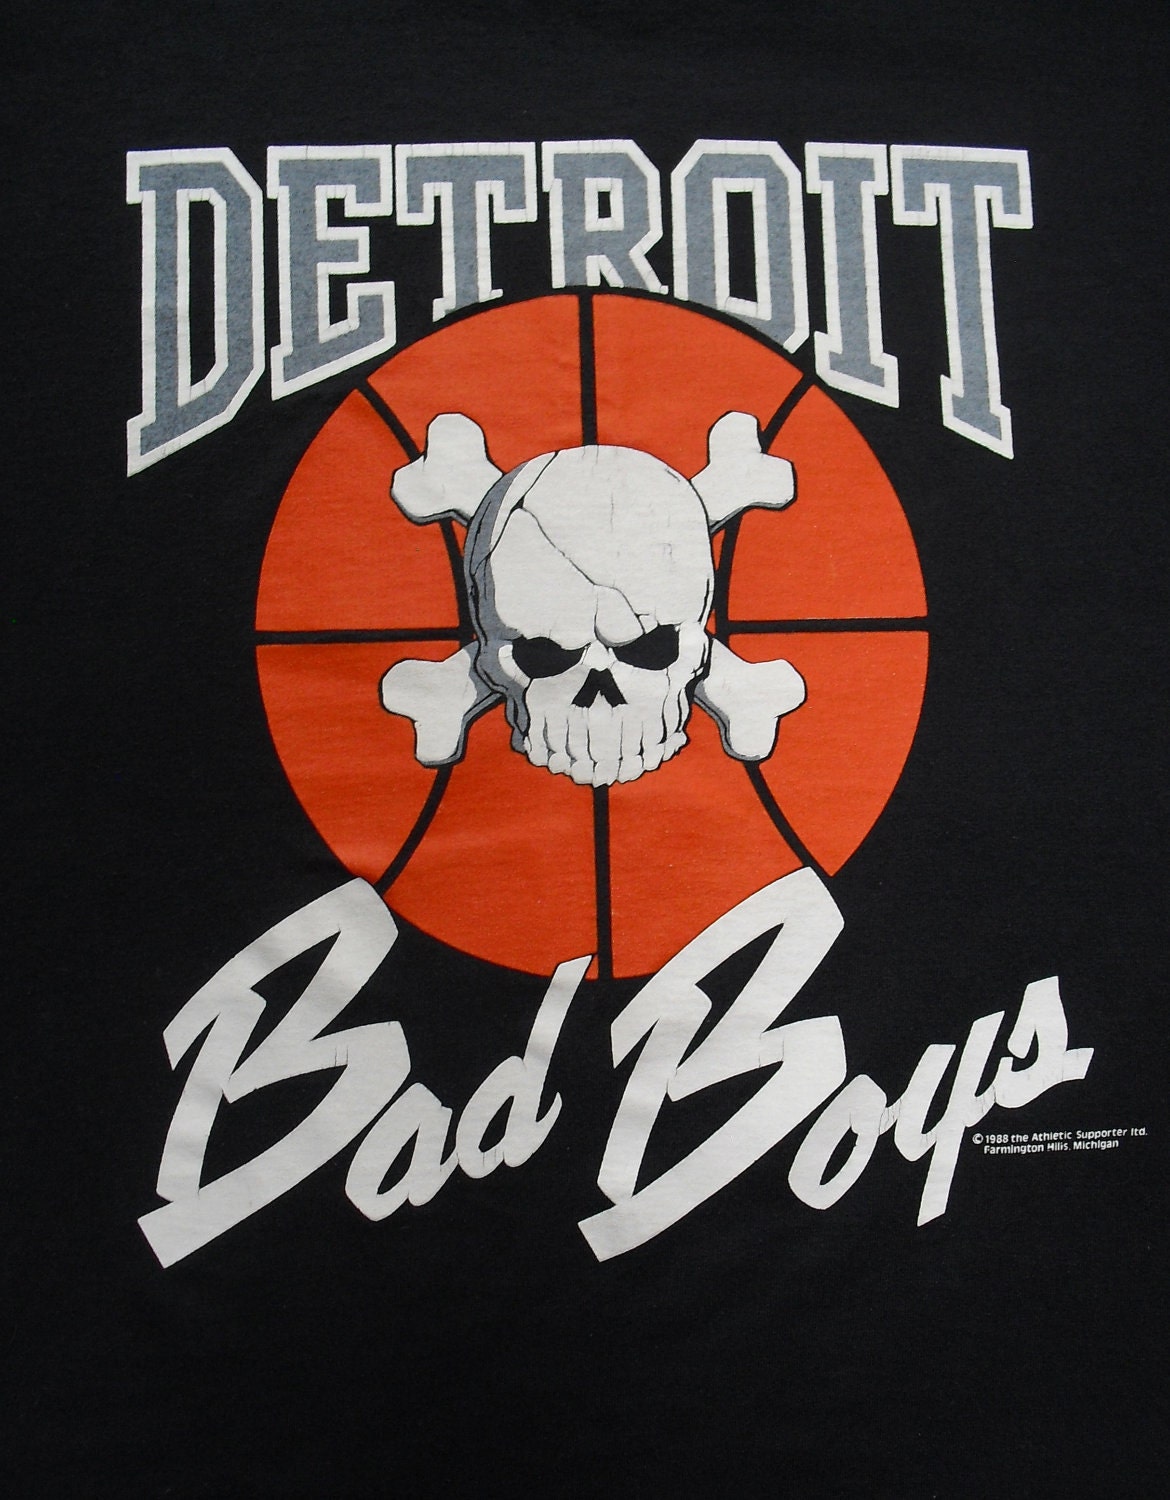 Detroit Pistons Bad Boys Members